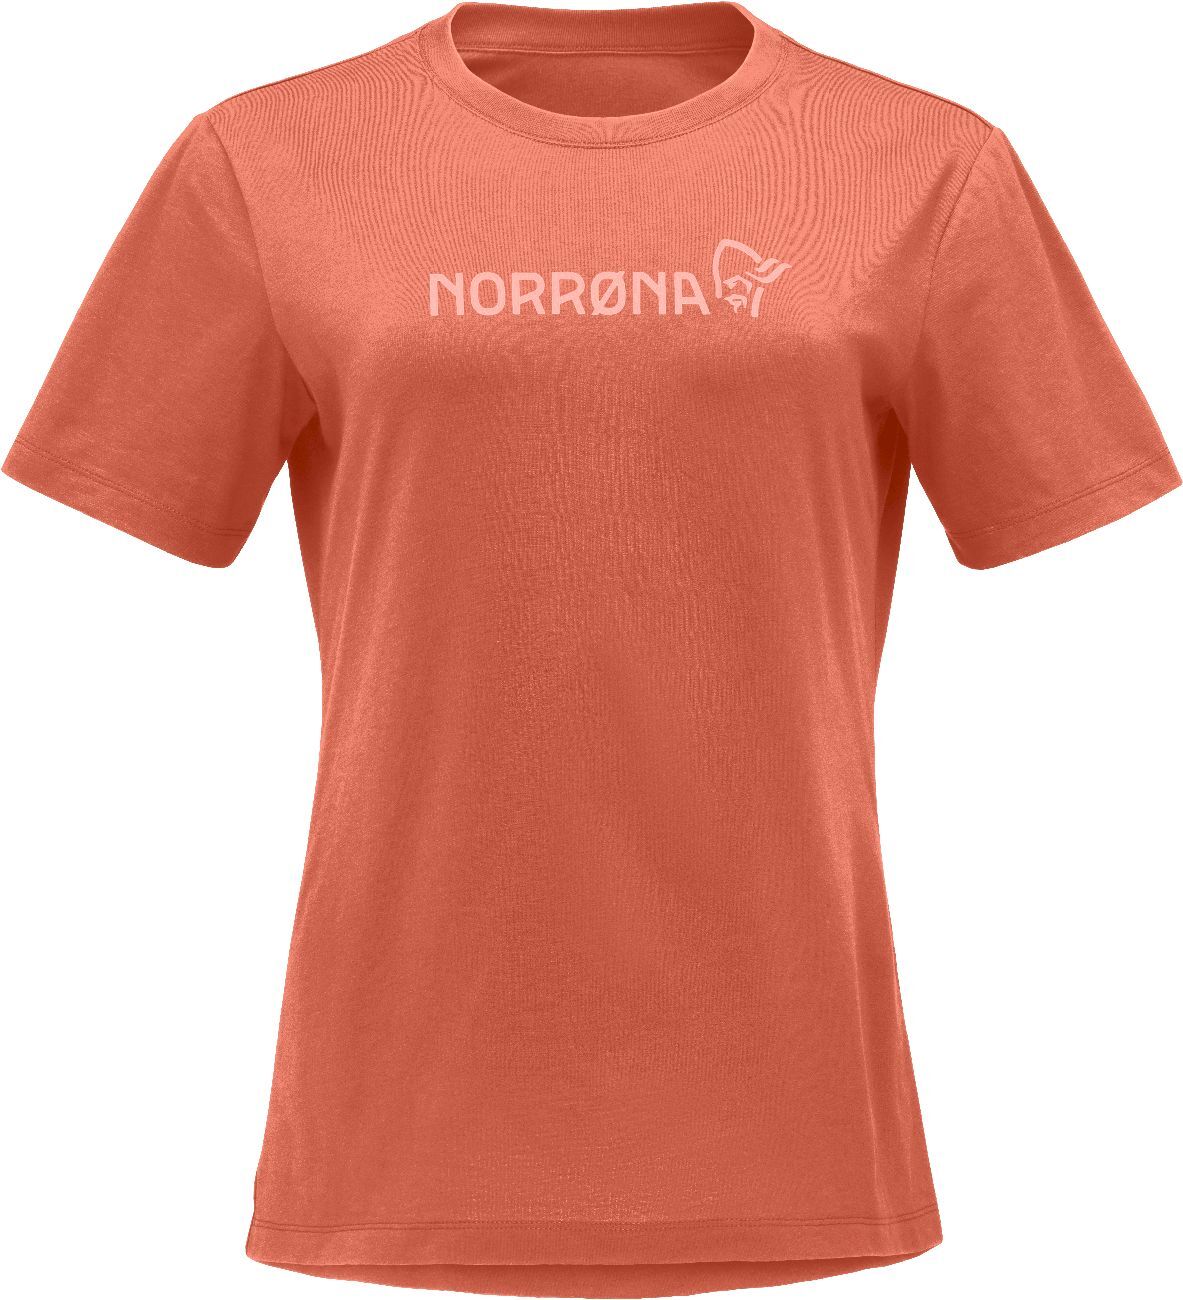 Norrona /29 Cotton Norrona Viking - T-shirt - Dames